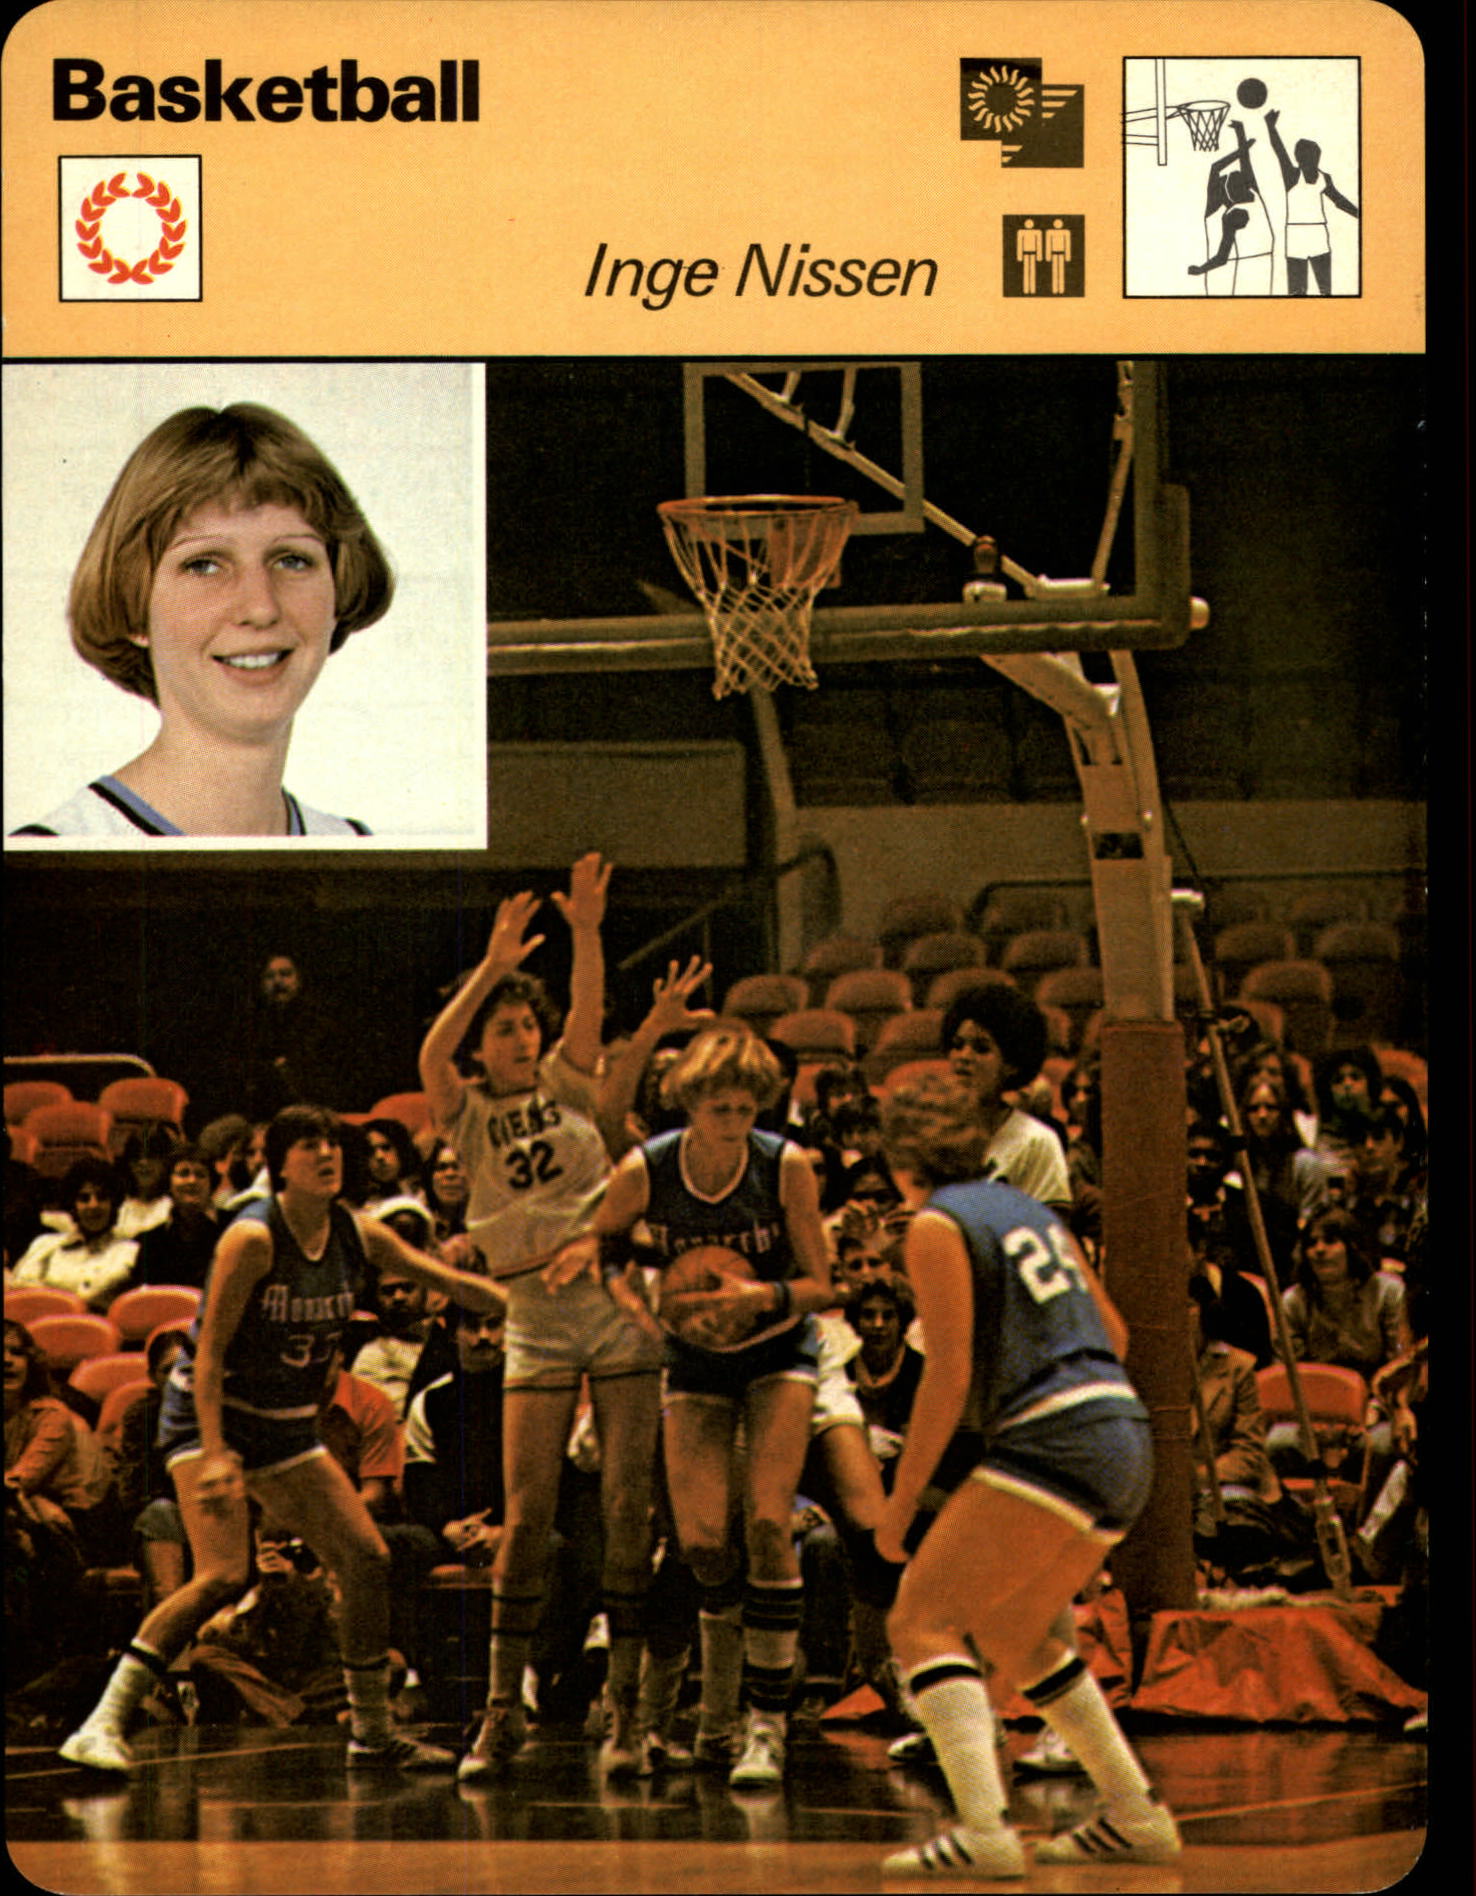  Inge Nissen player image